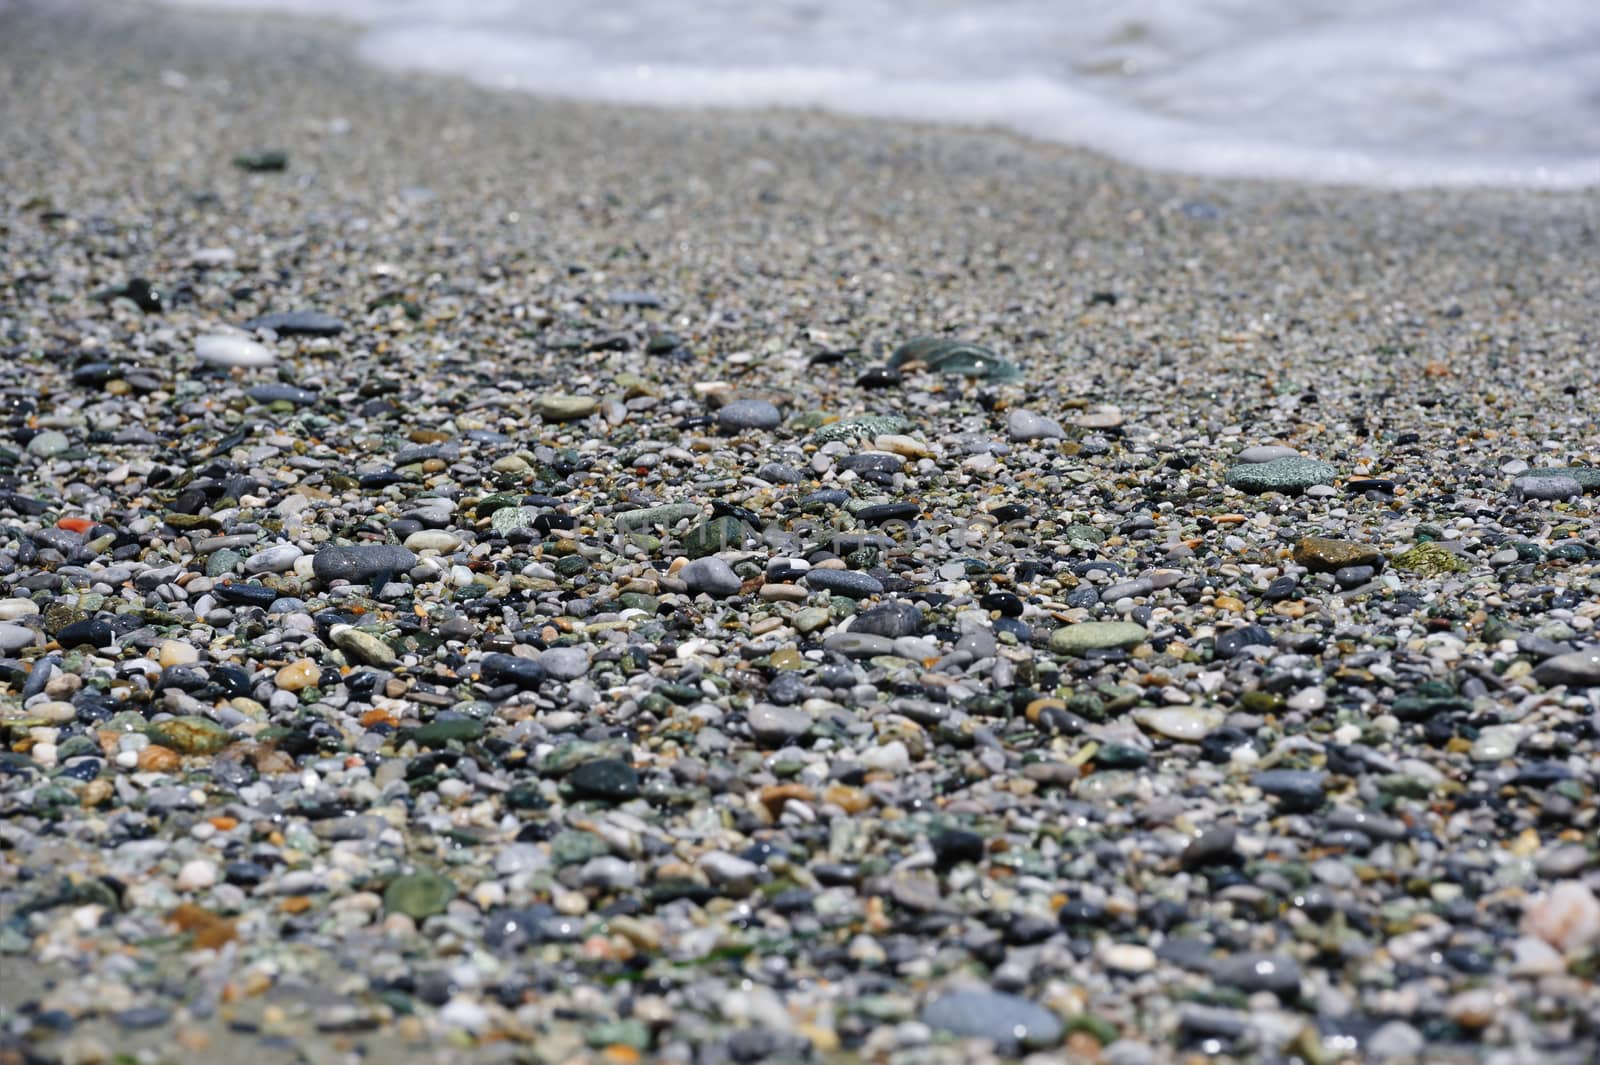 Sea multicolored pebbles, gravel beach in sunlight, selective focus, background